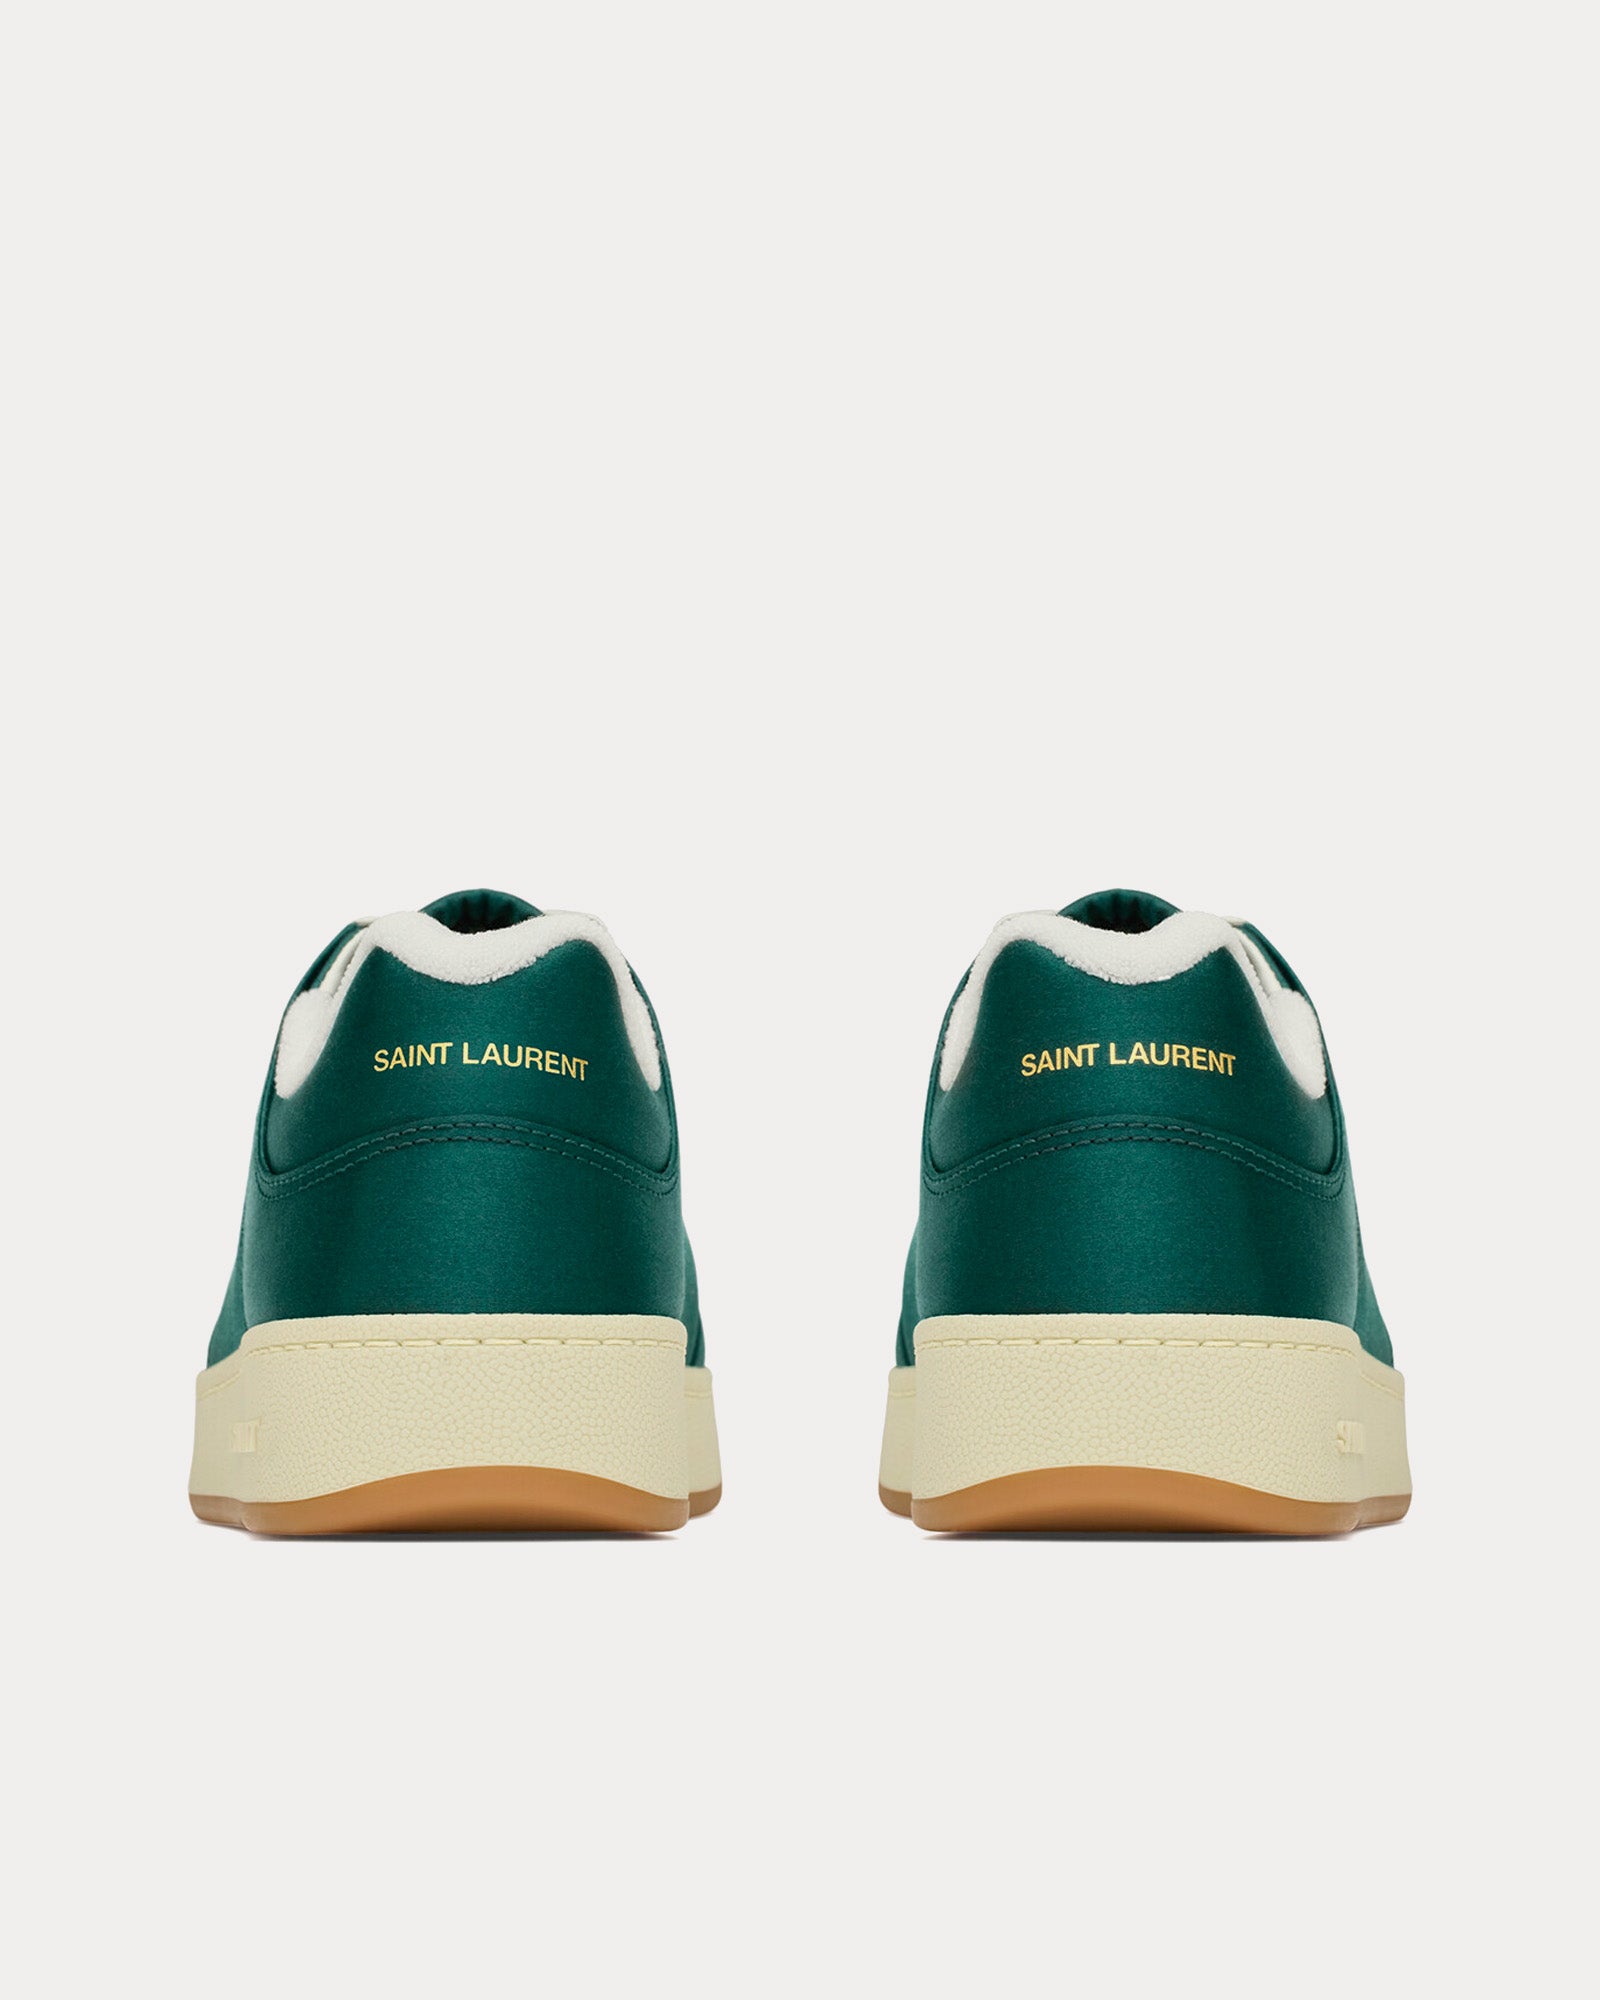 Saint Laurent - SL/61 Satin Crepe Bottle Green / White / Honey Low Top Sneakers